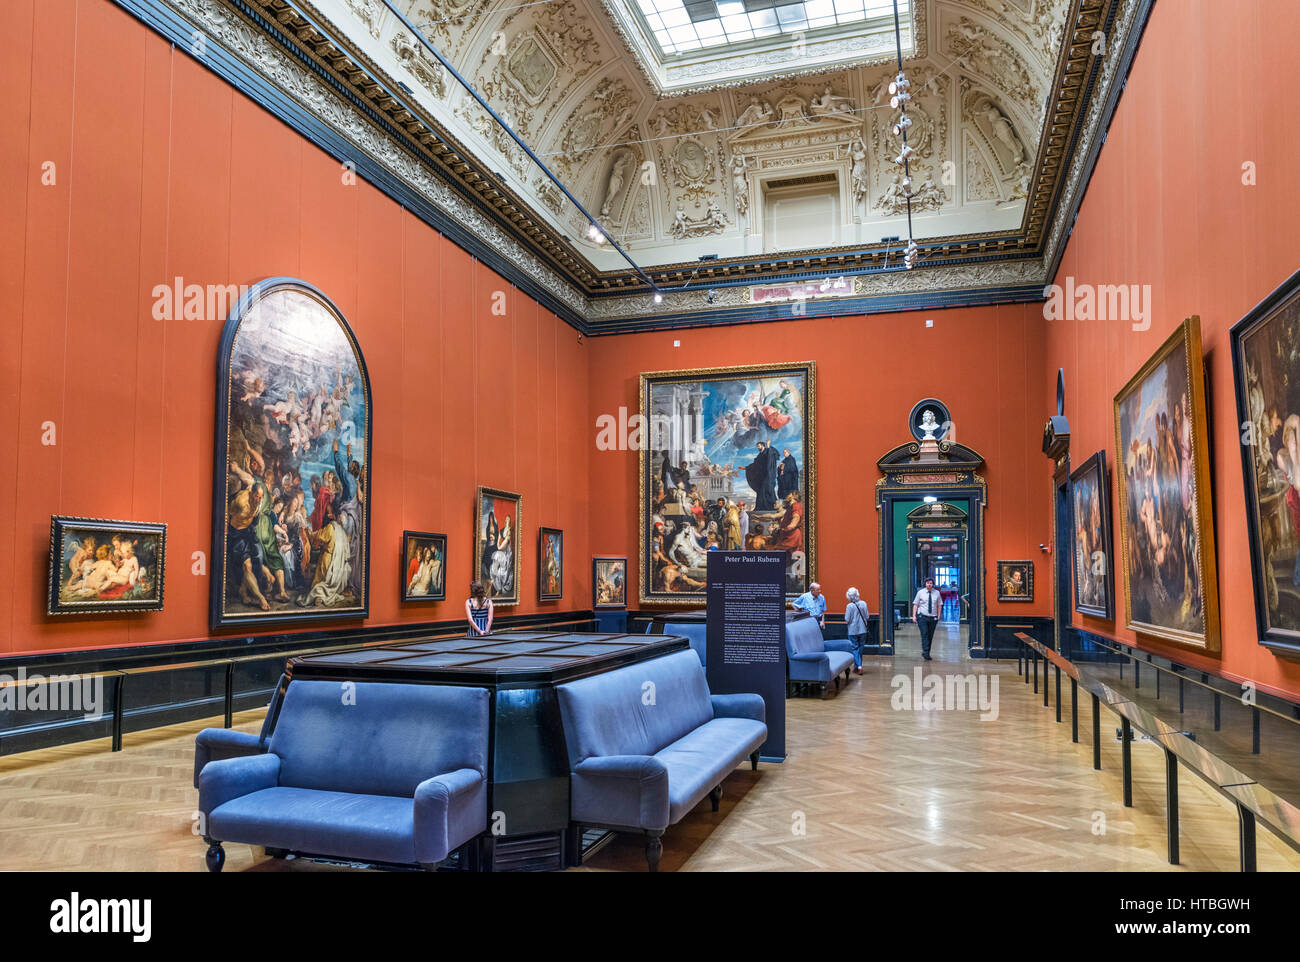 Stanza contenente dipinti di Sir Peter Paul Rubens, Kunsthistorisches Museum, Vienna, Austria Foto Stock